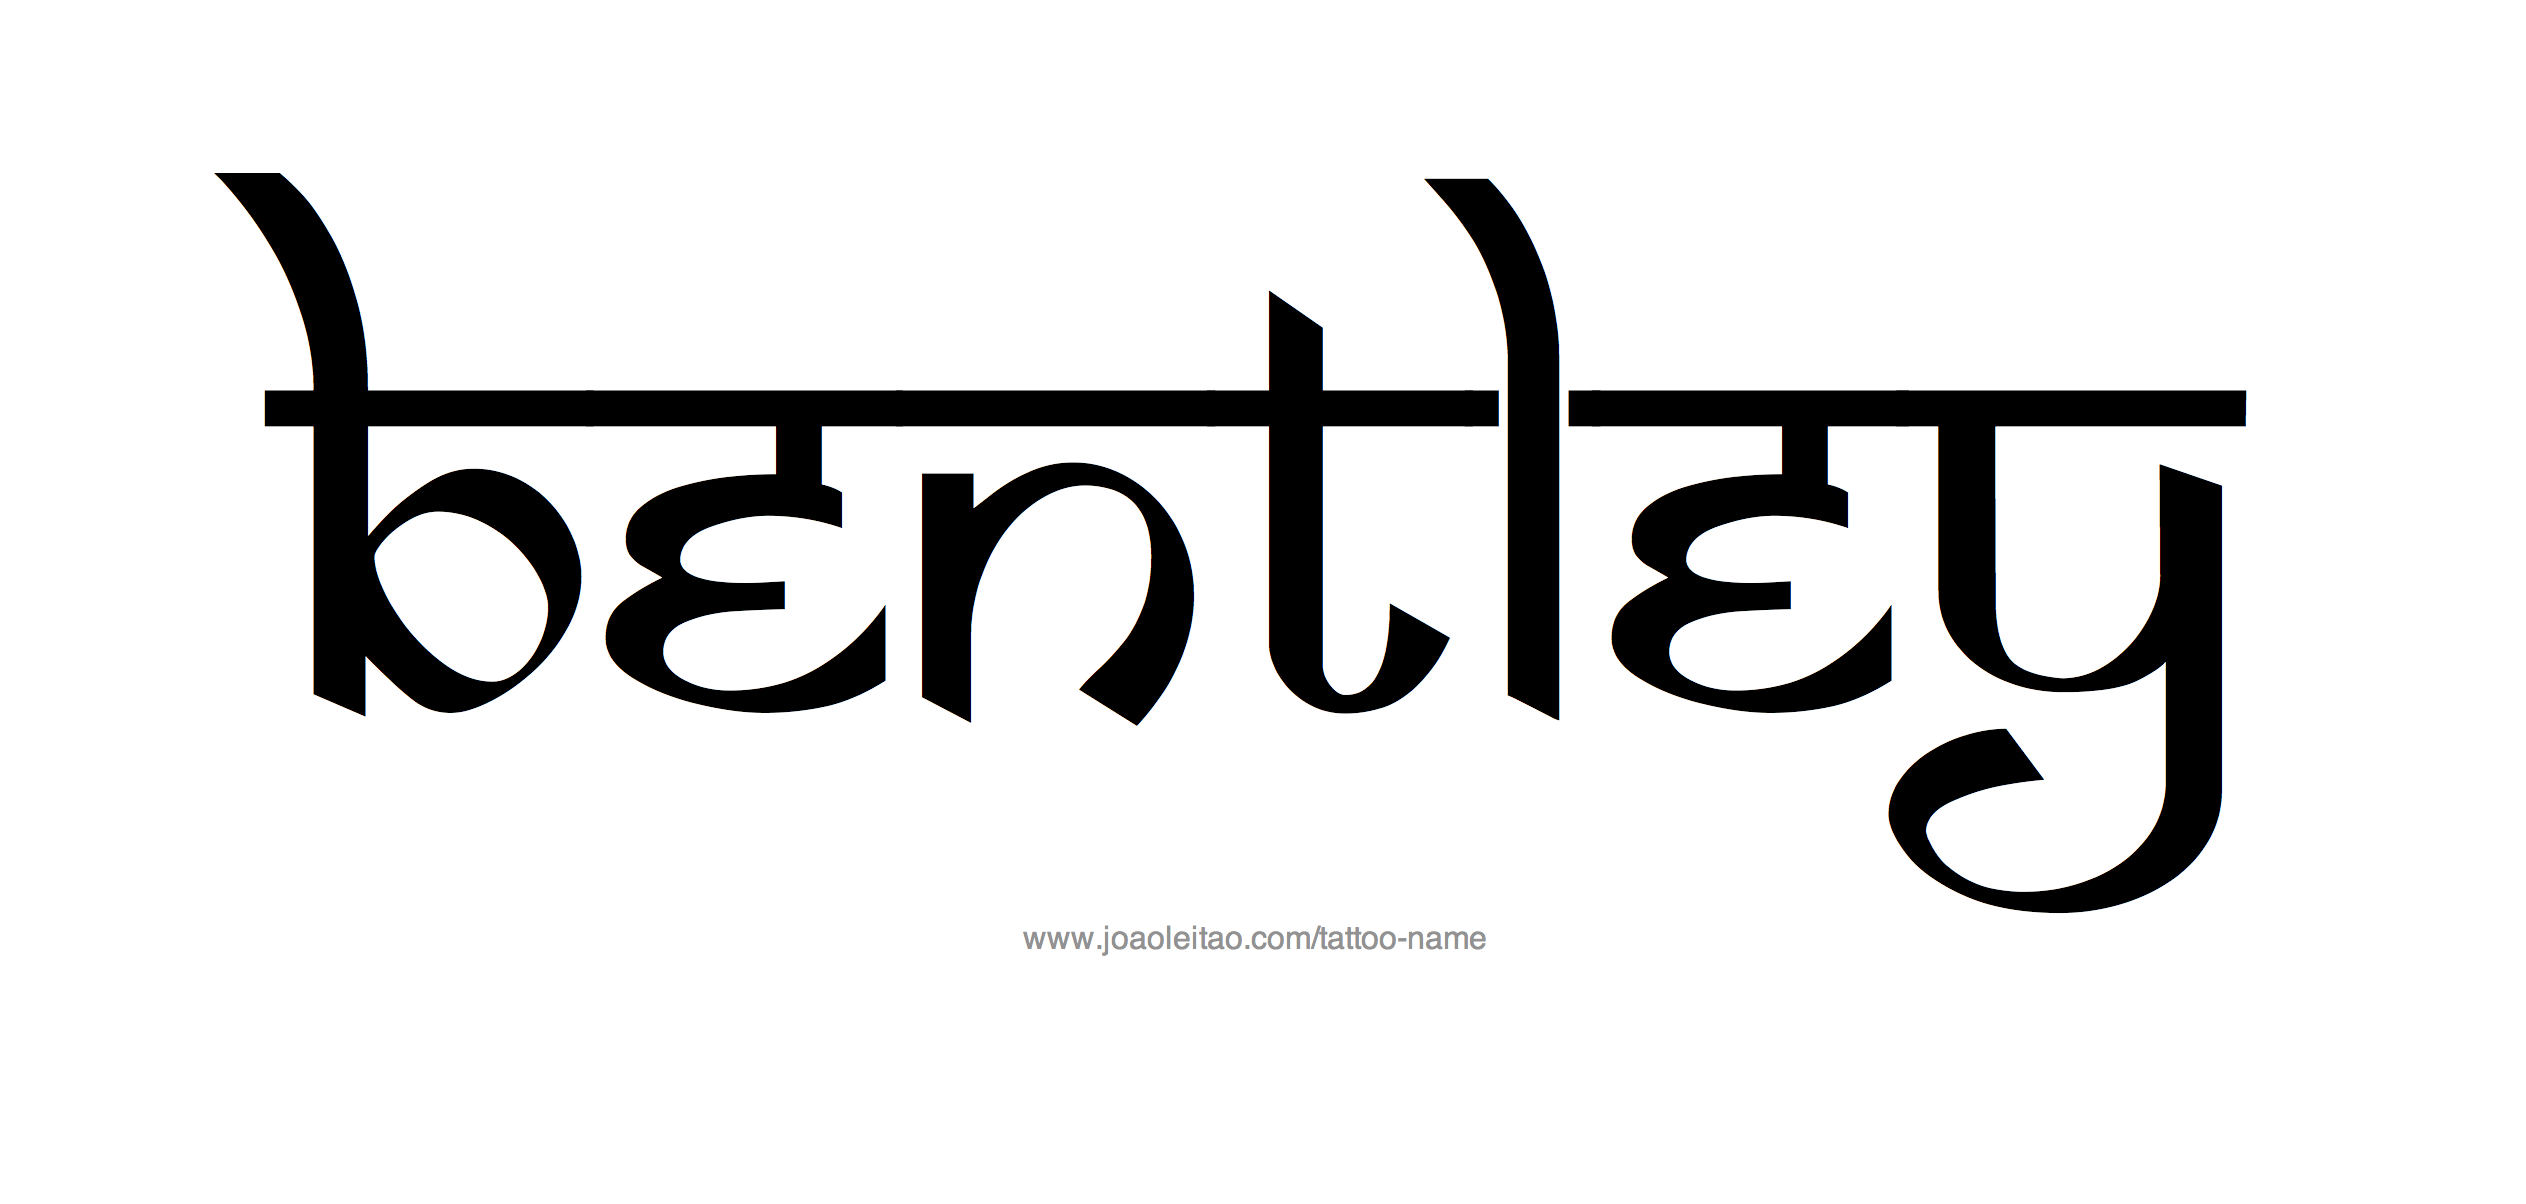 hindi font generator free text conversion online no watermarkFont  generator online